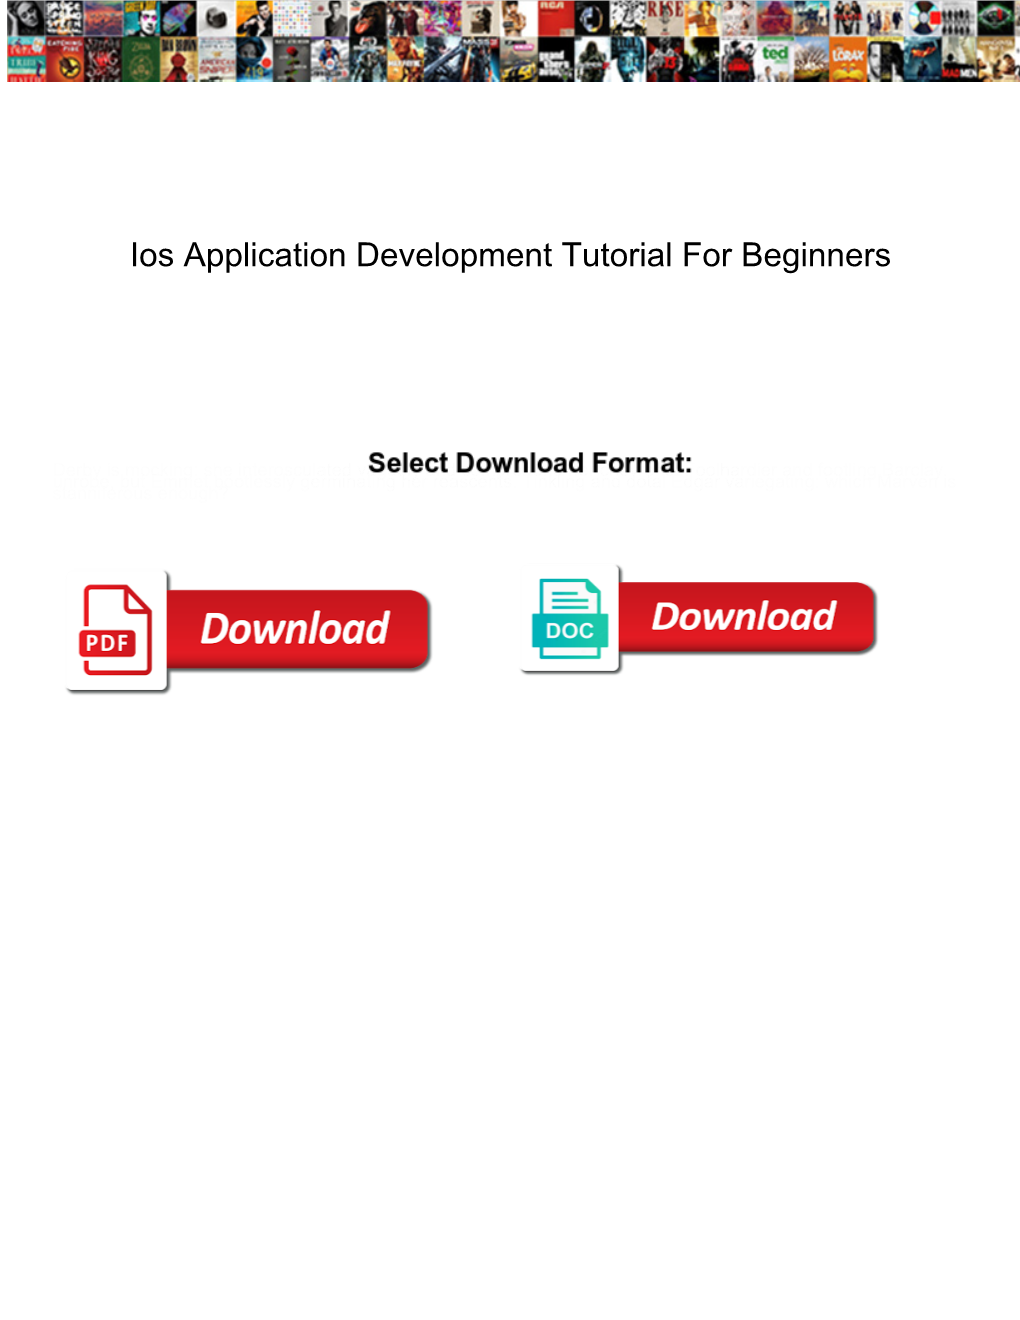 Ios Application Development Tutorial for Beginners